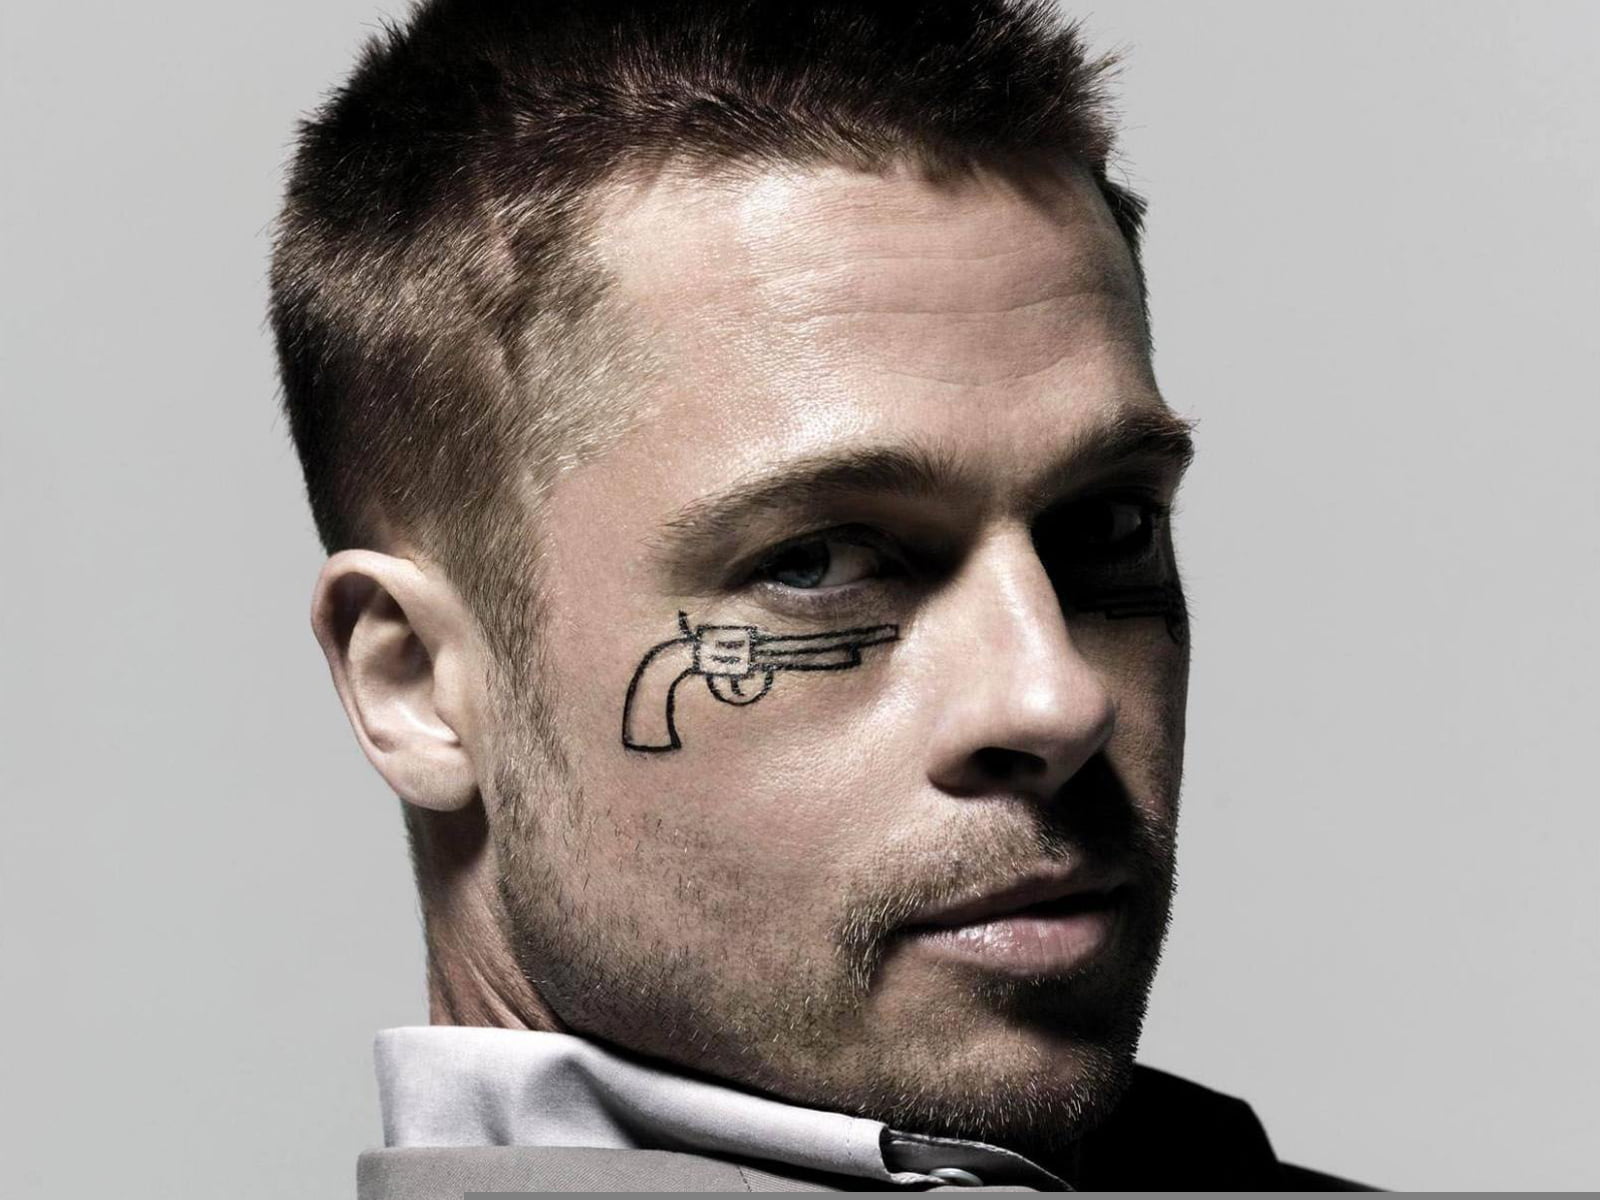 men's grey and white top, actor, face tattoos, Brad Pitt, good:)))